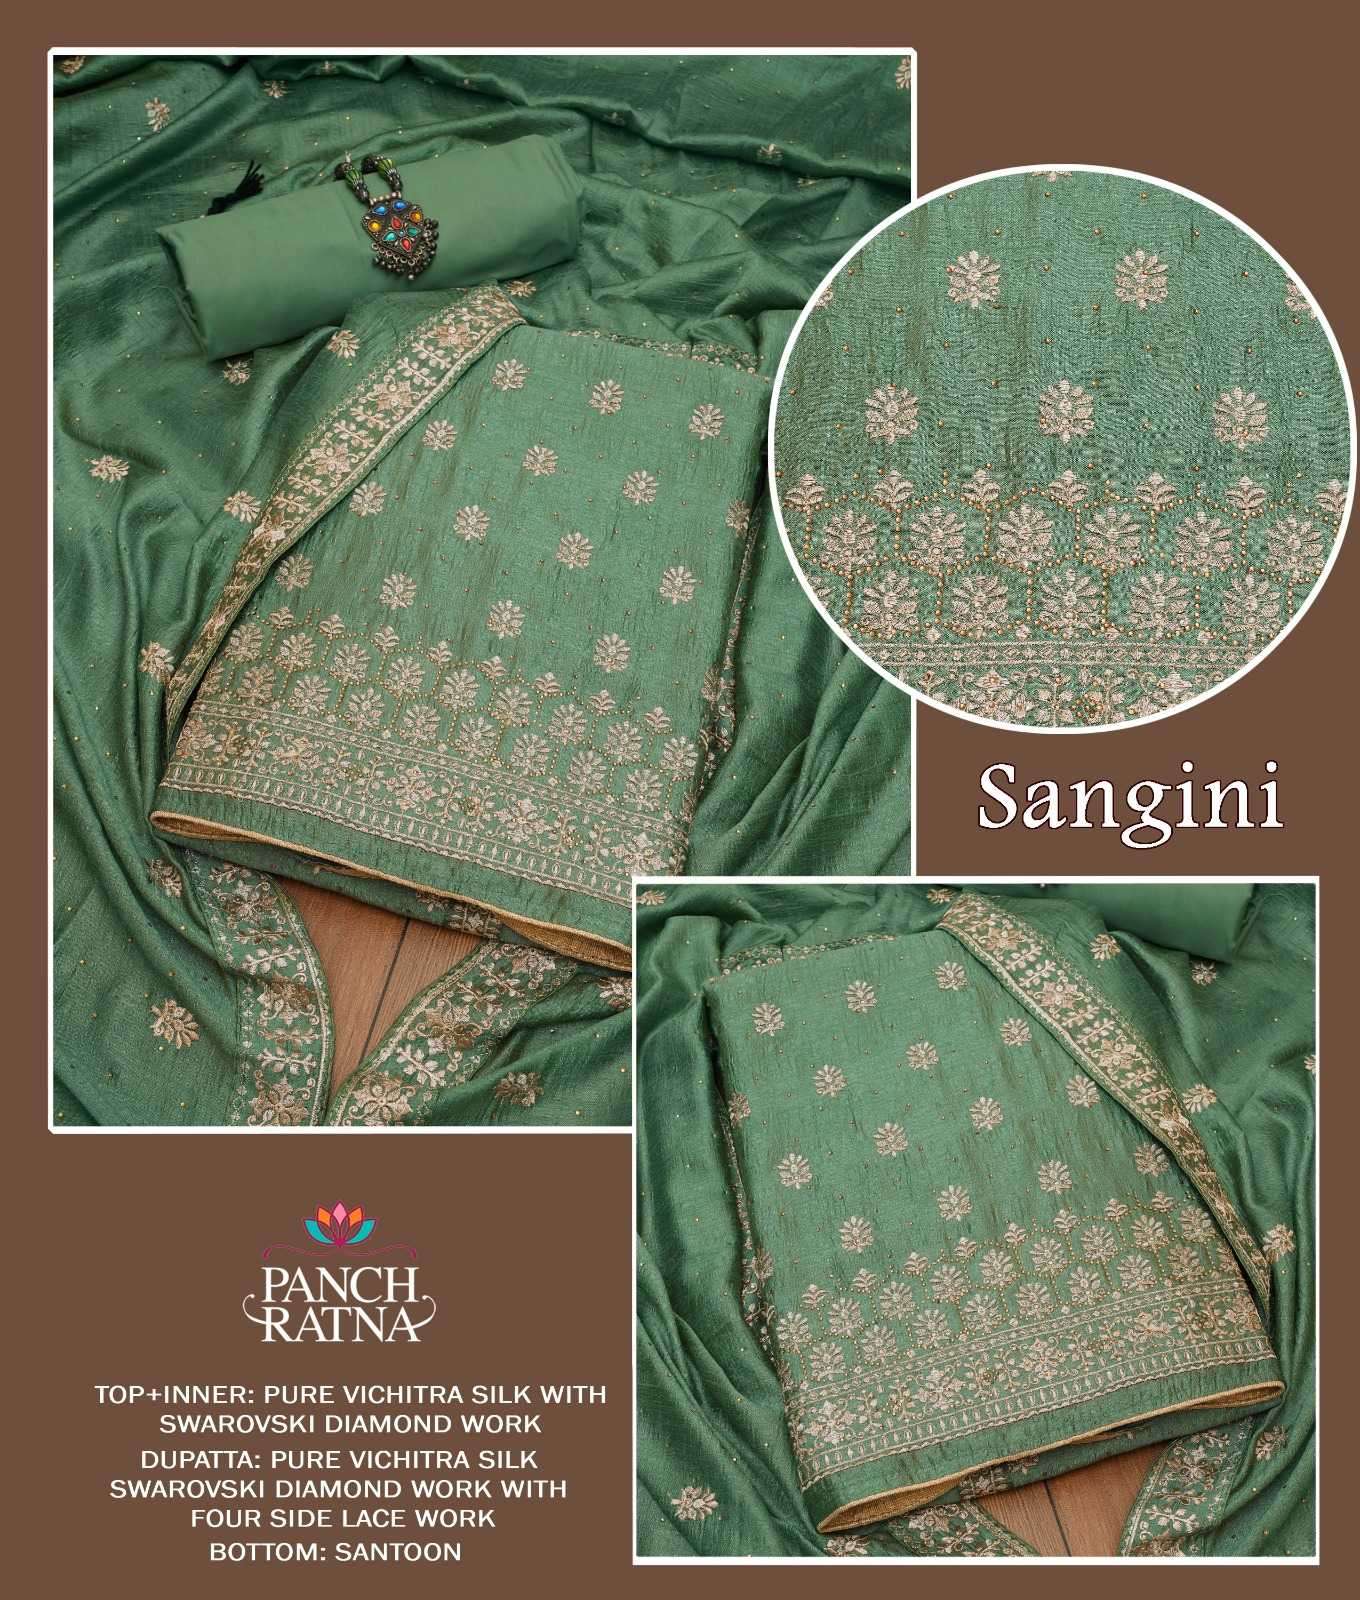 panch ratna sangini silk pure vichitra silk suit 